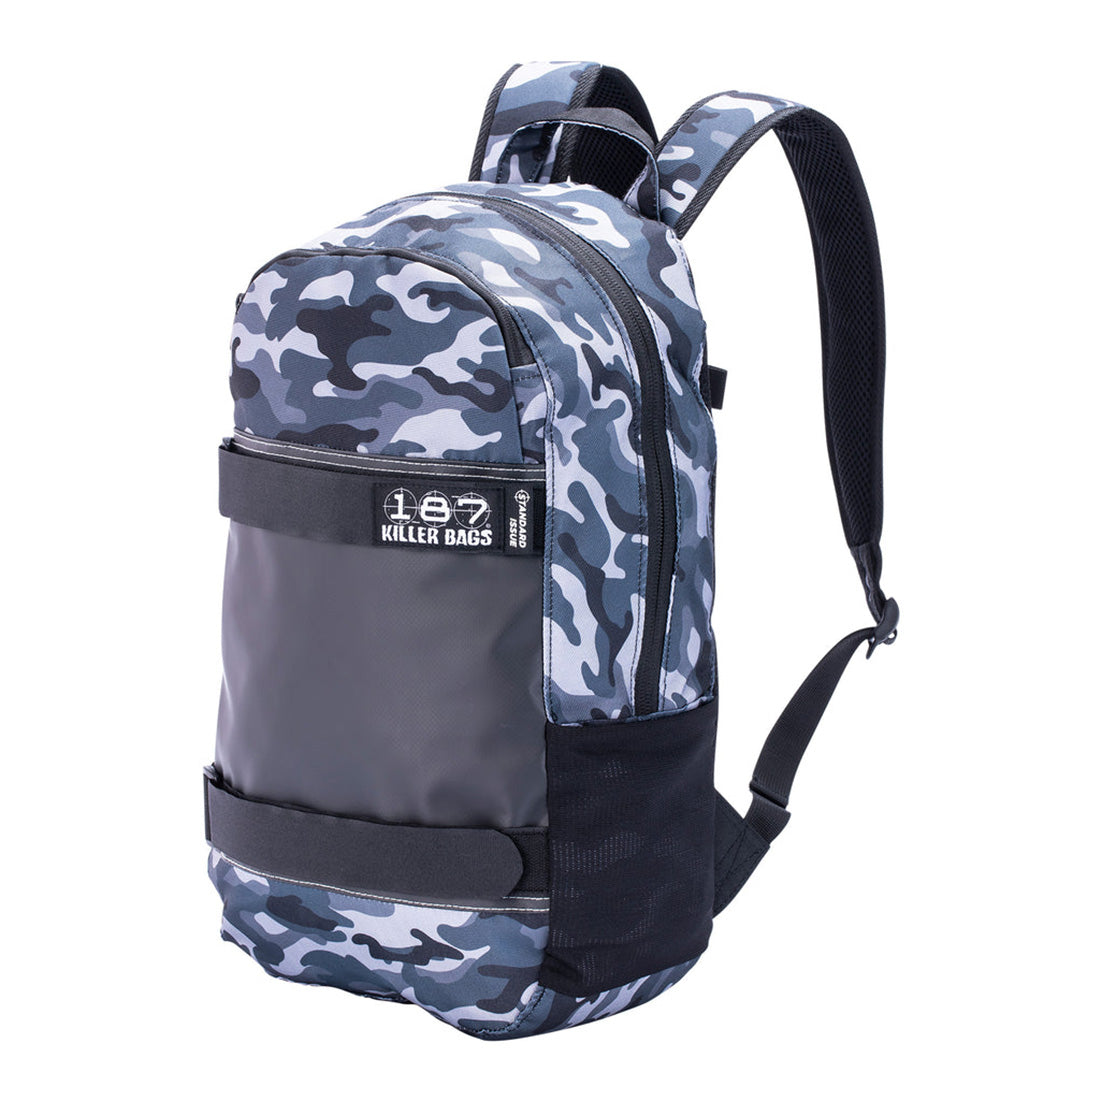 187 Killer Backpack - Camo Bags and Backpacks